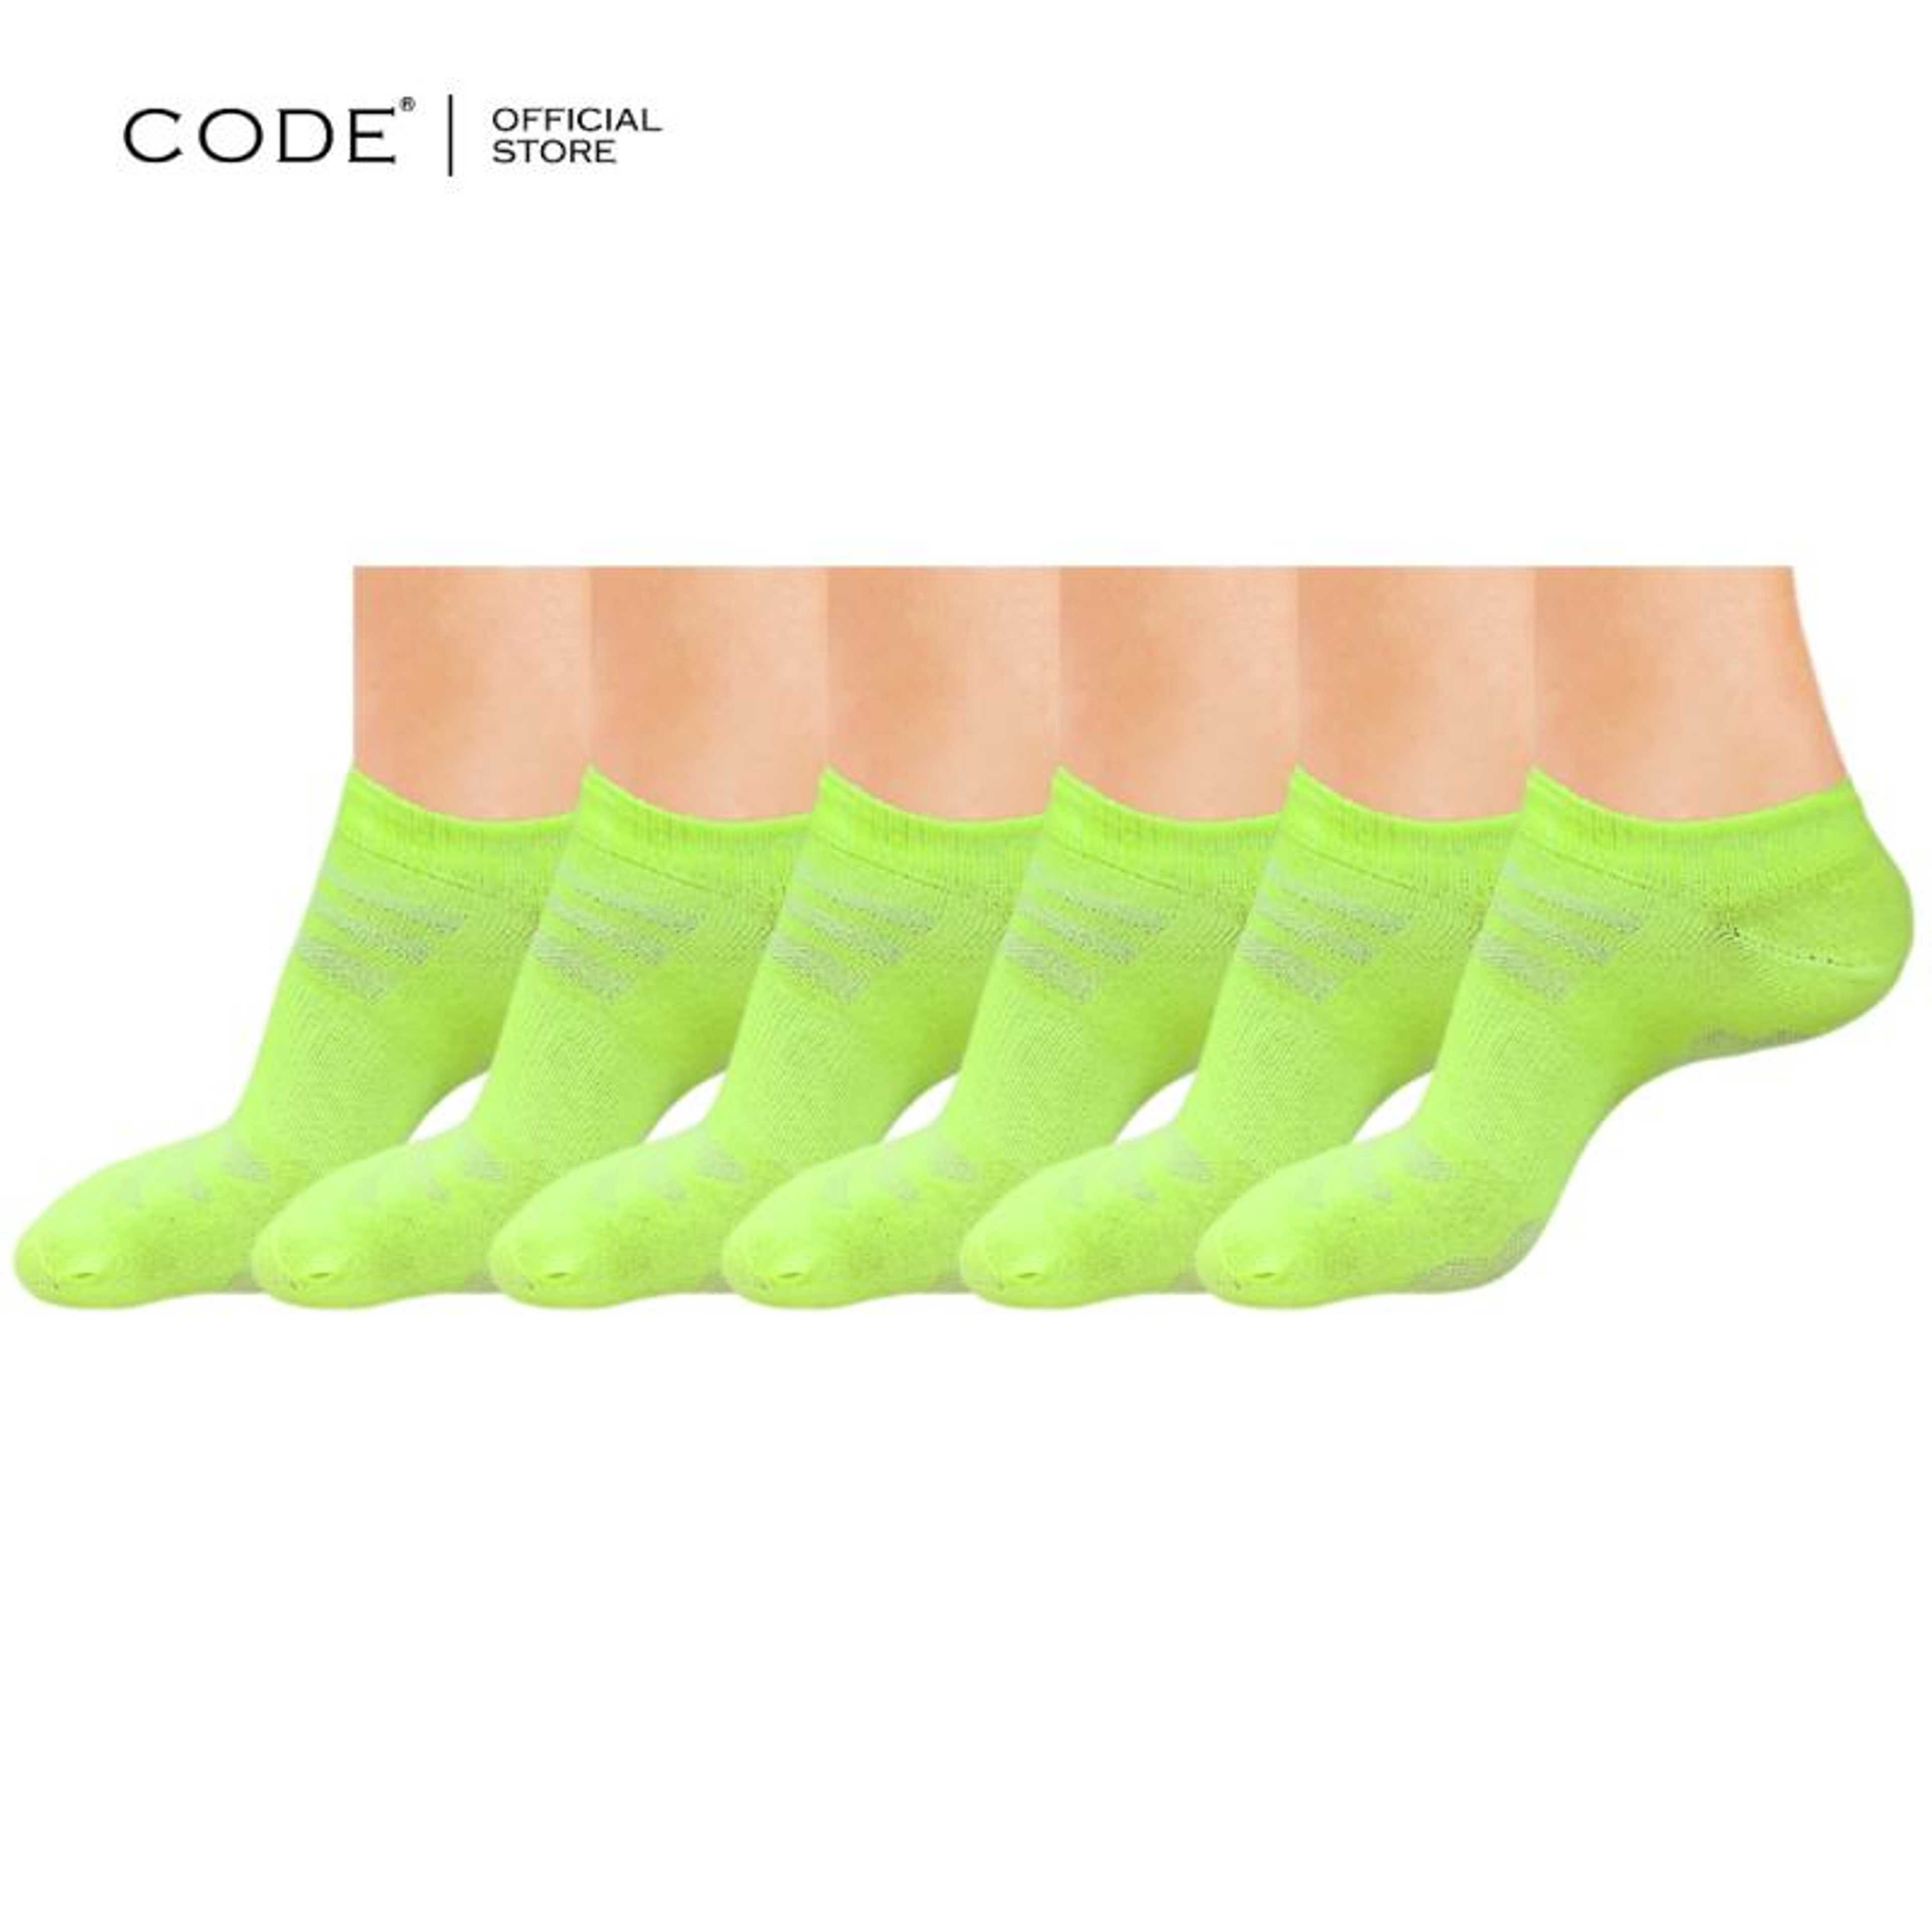 Code 6 Pairs Cotton Ankle Socks For Men Women - 3 Random colors